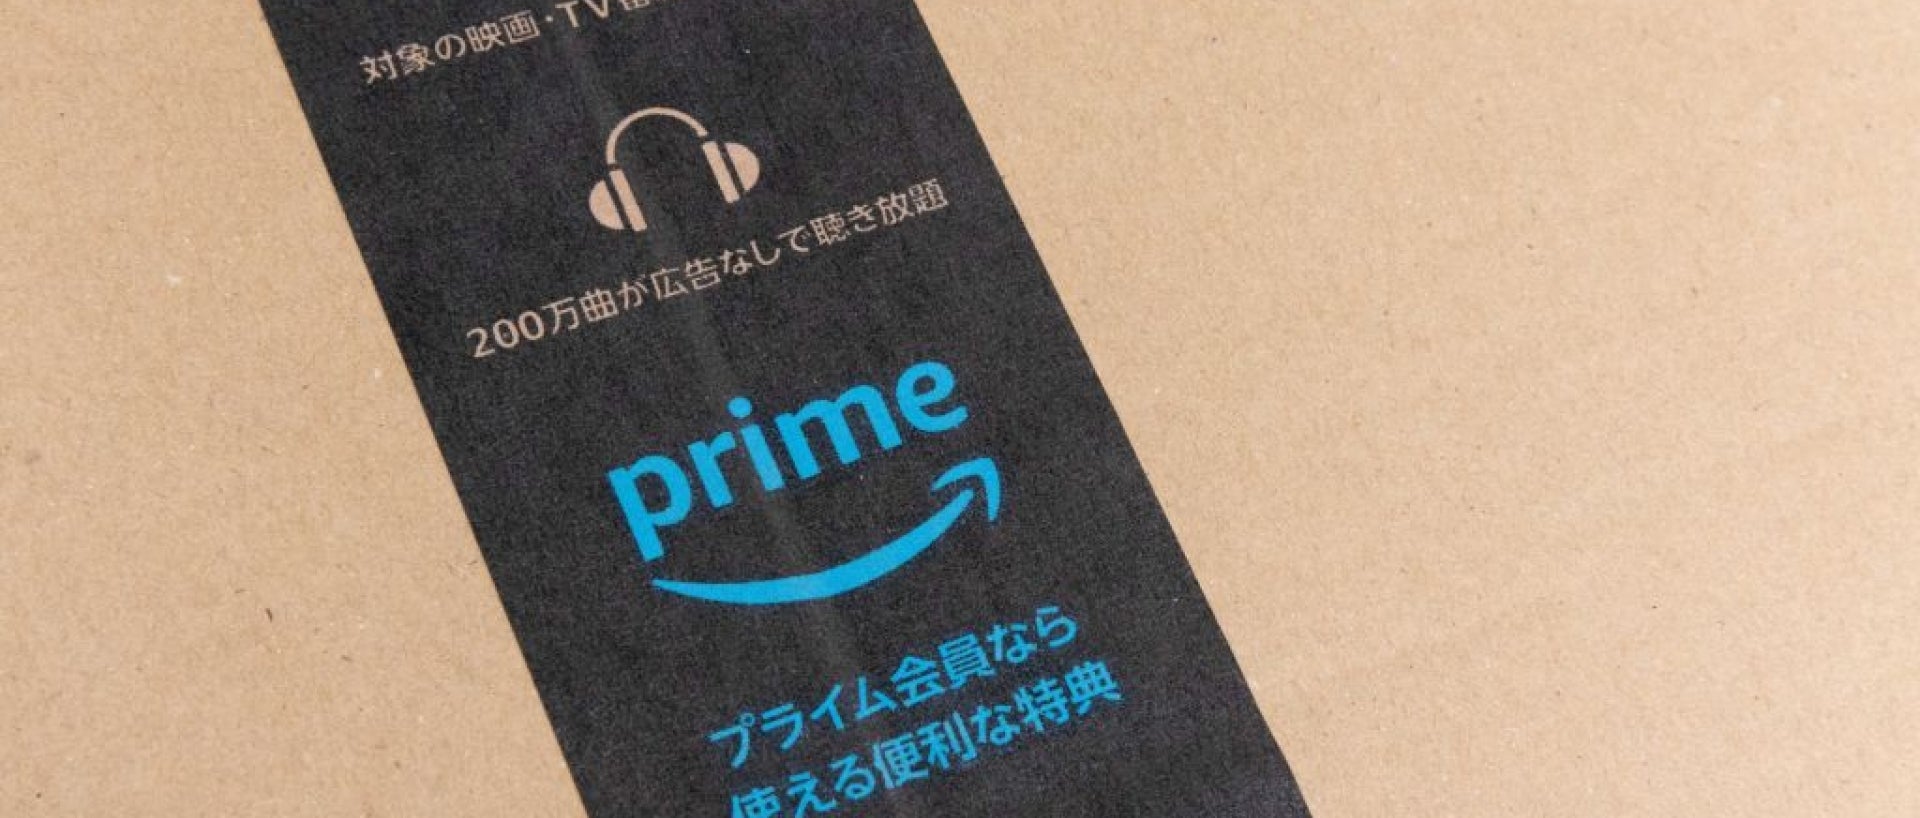 Amazon sticker on box